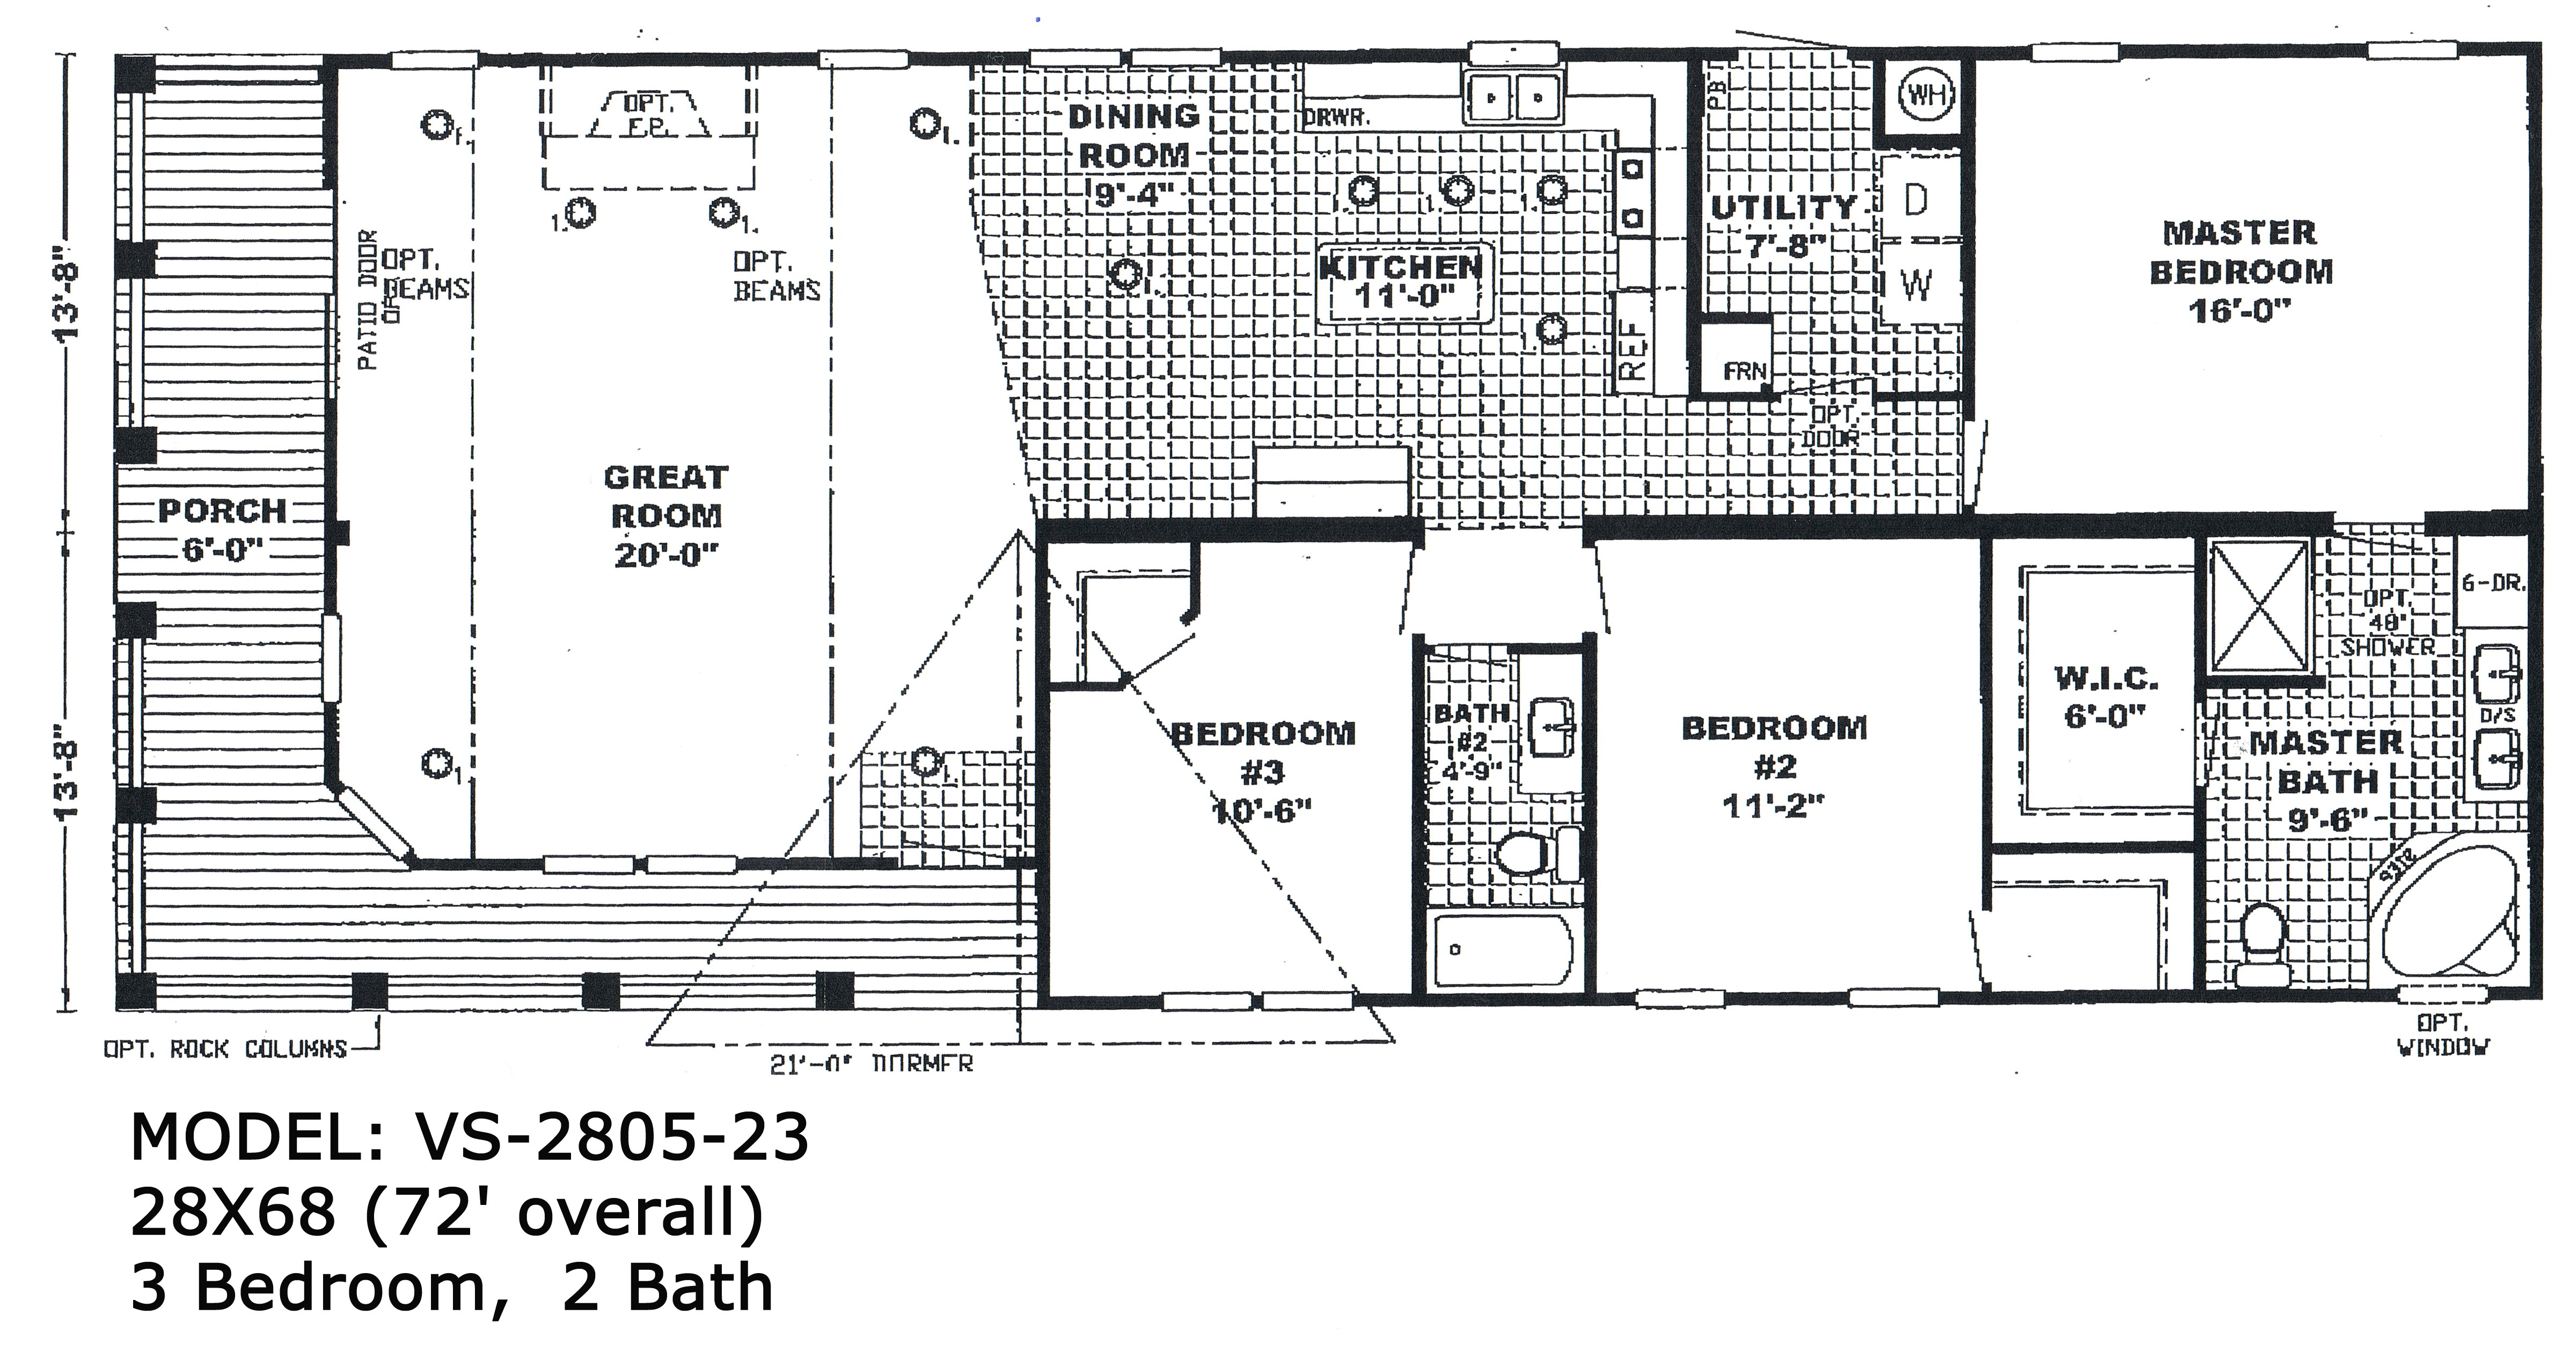 Mobile Home Floor Plans Double Wide Double Wide Floorplans Mccants Mobile Homes